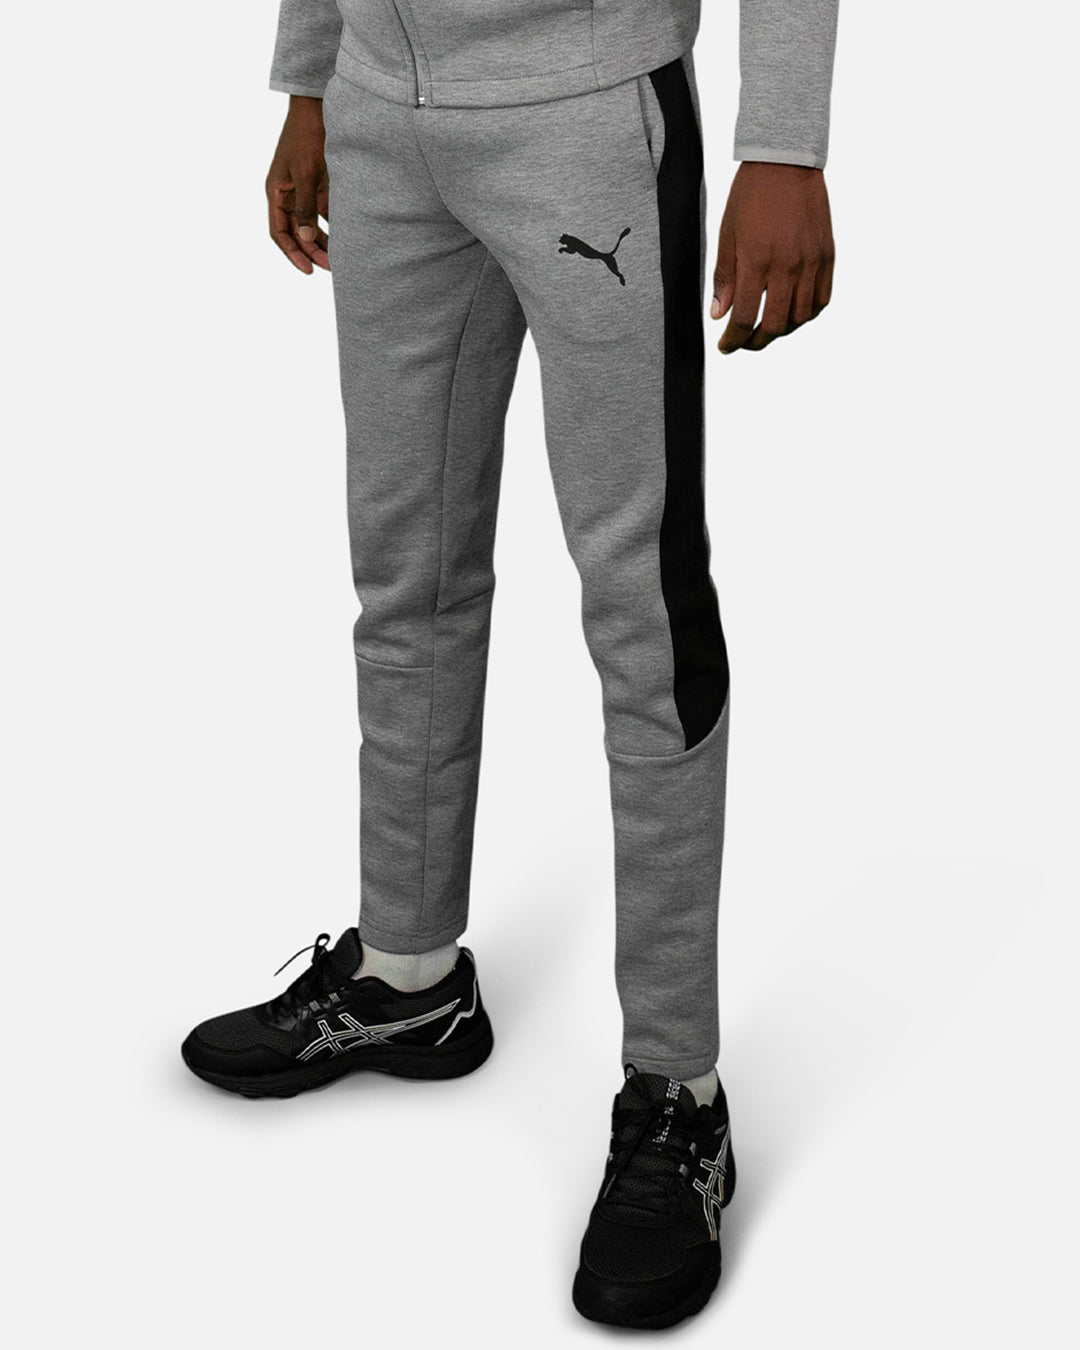 Puma Evostripe Track Pants - Grey/Black